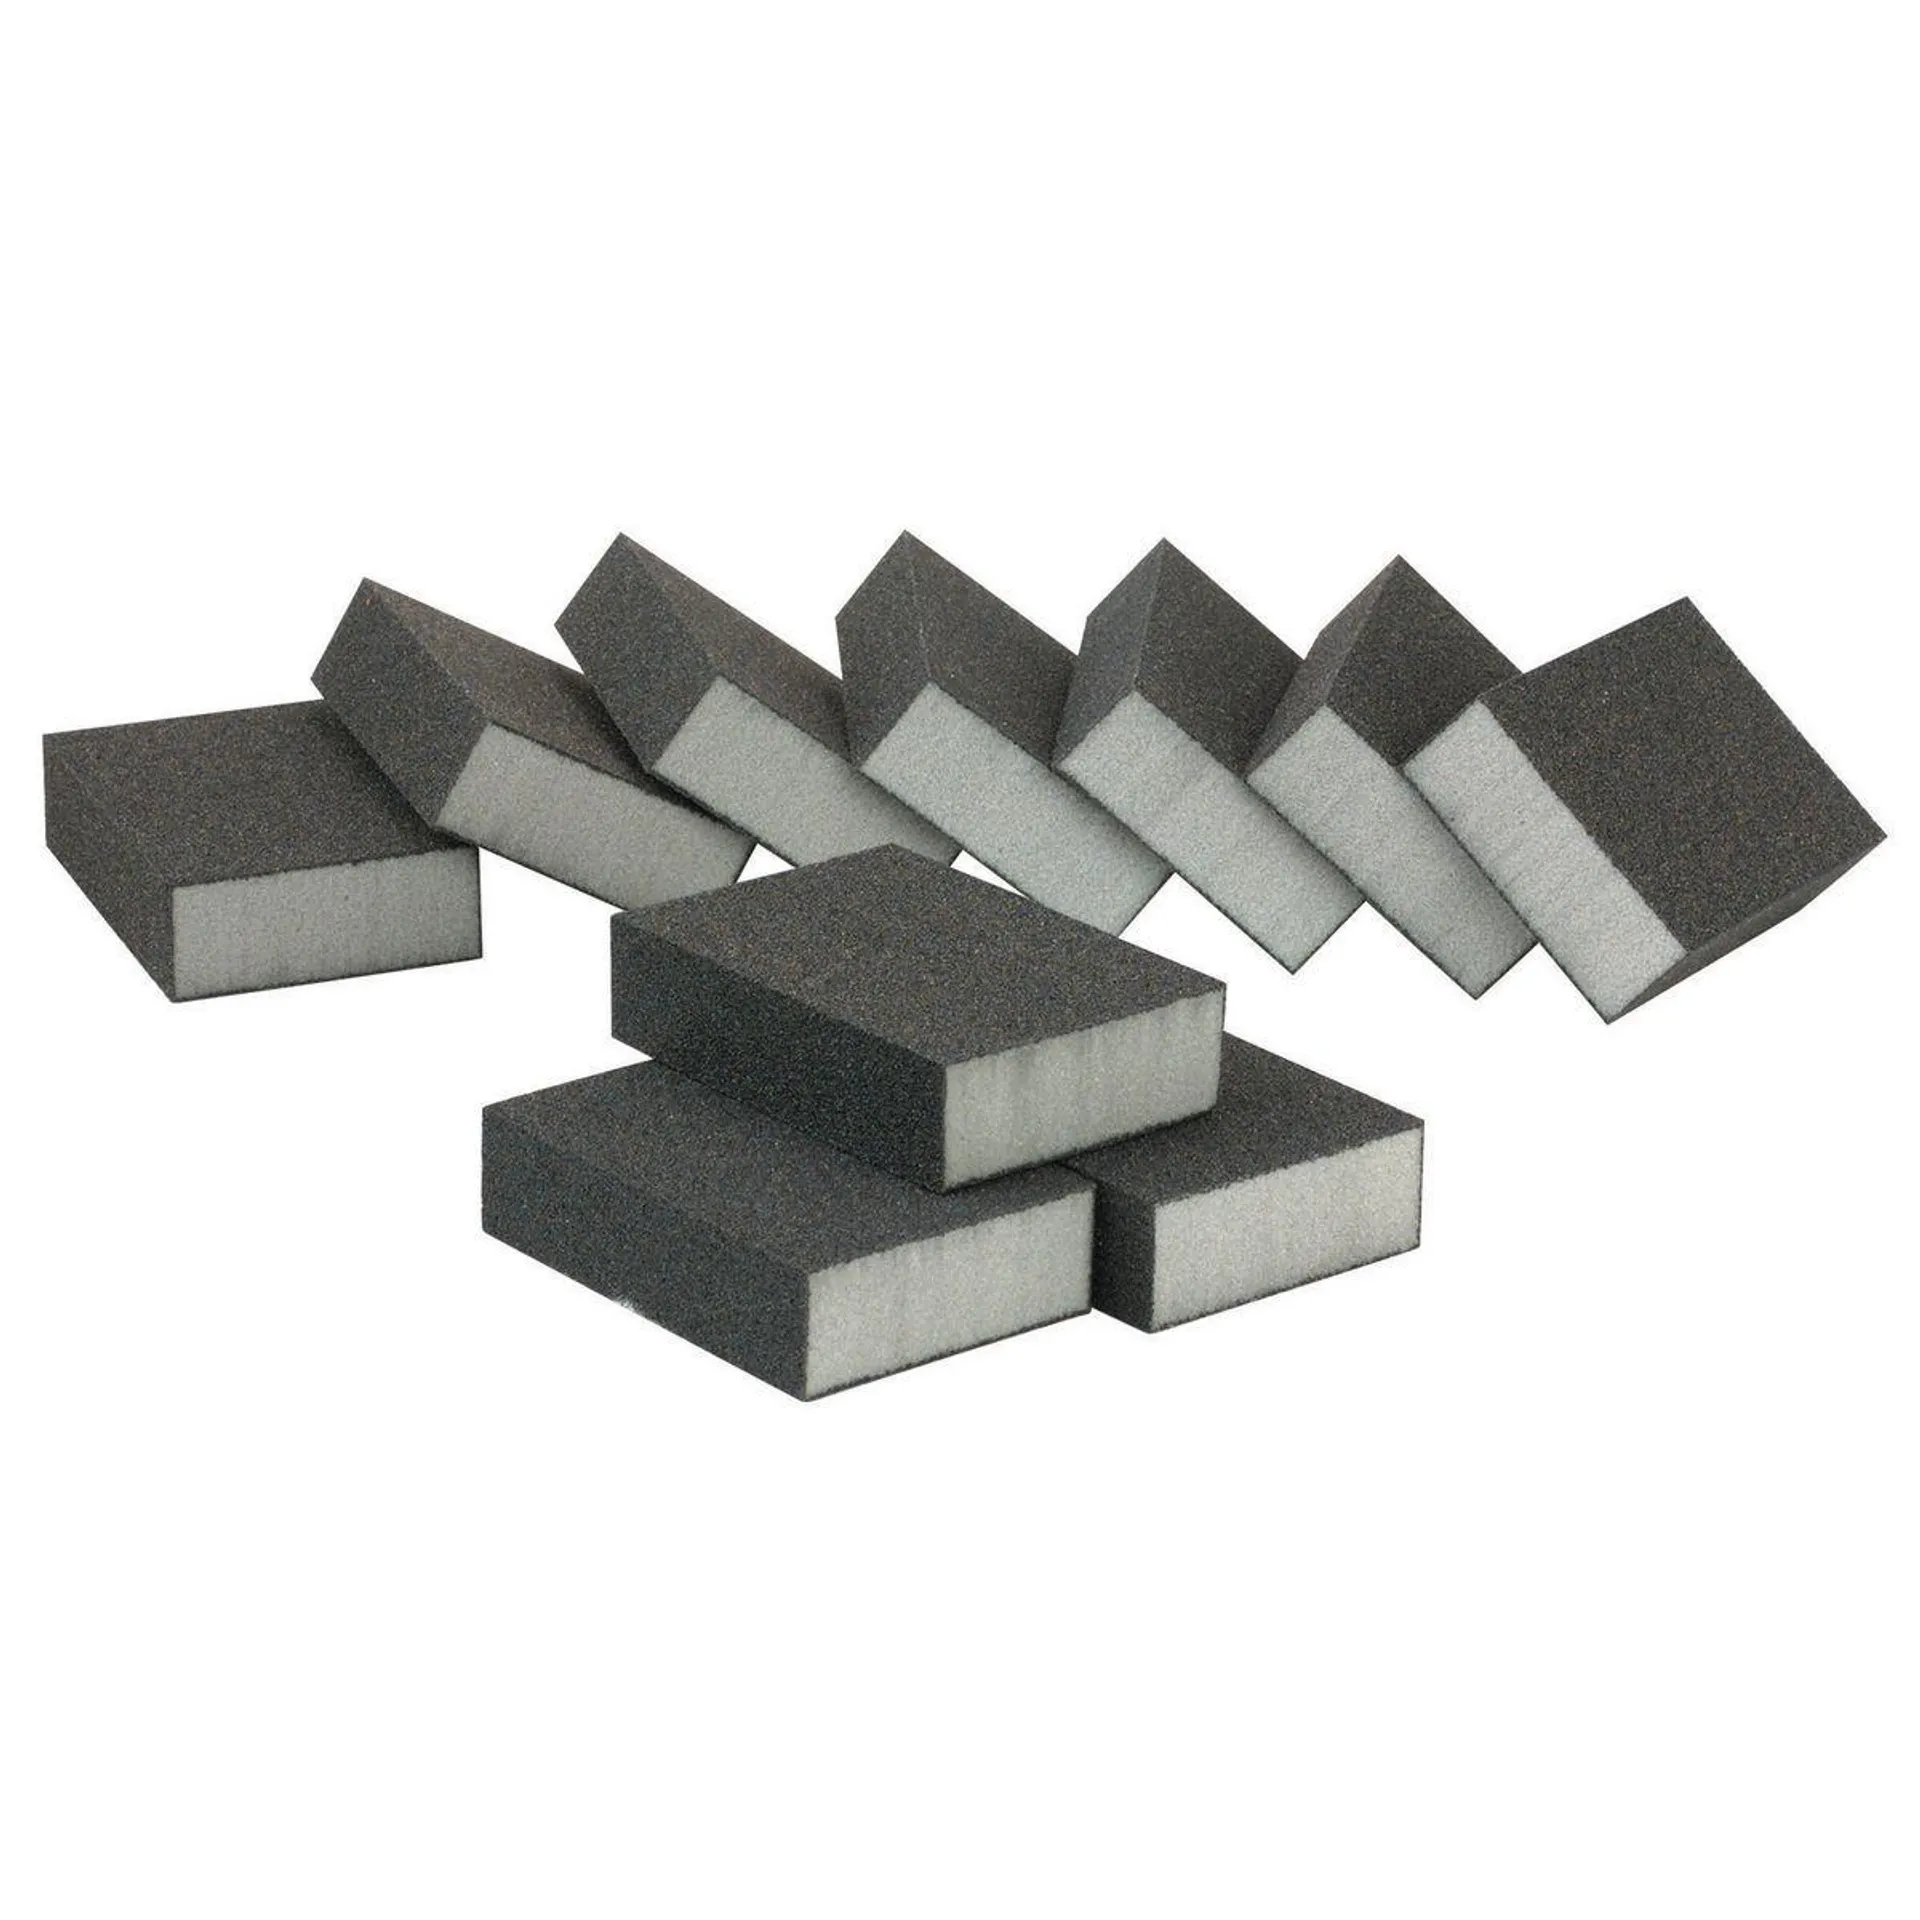 Aluminum Oxide Sanding Sponges - Medium Grade, 10 Pack